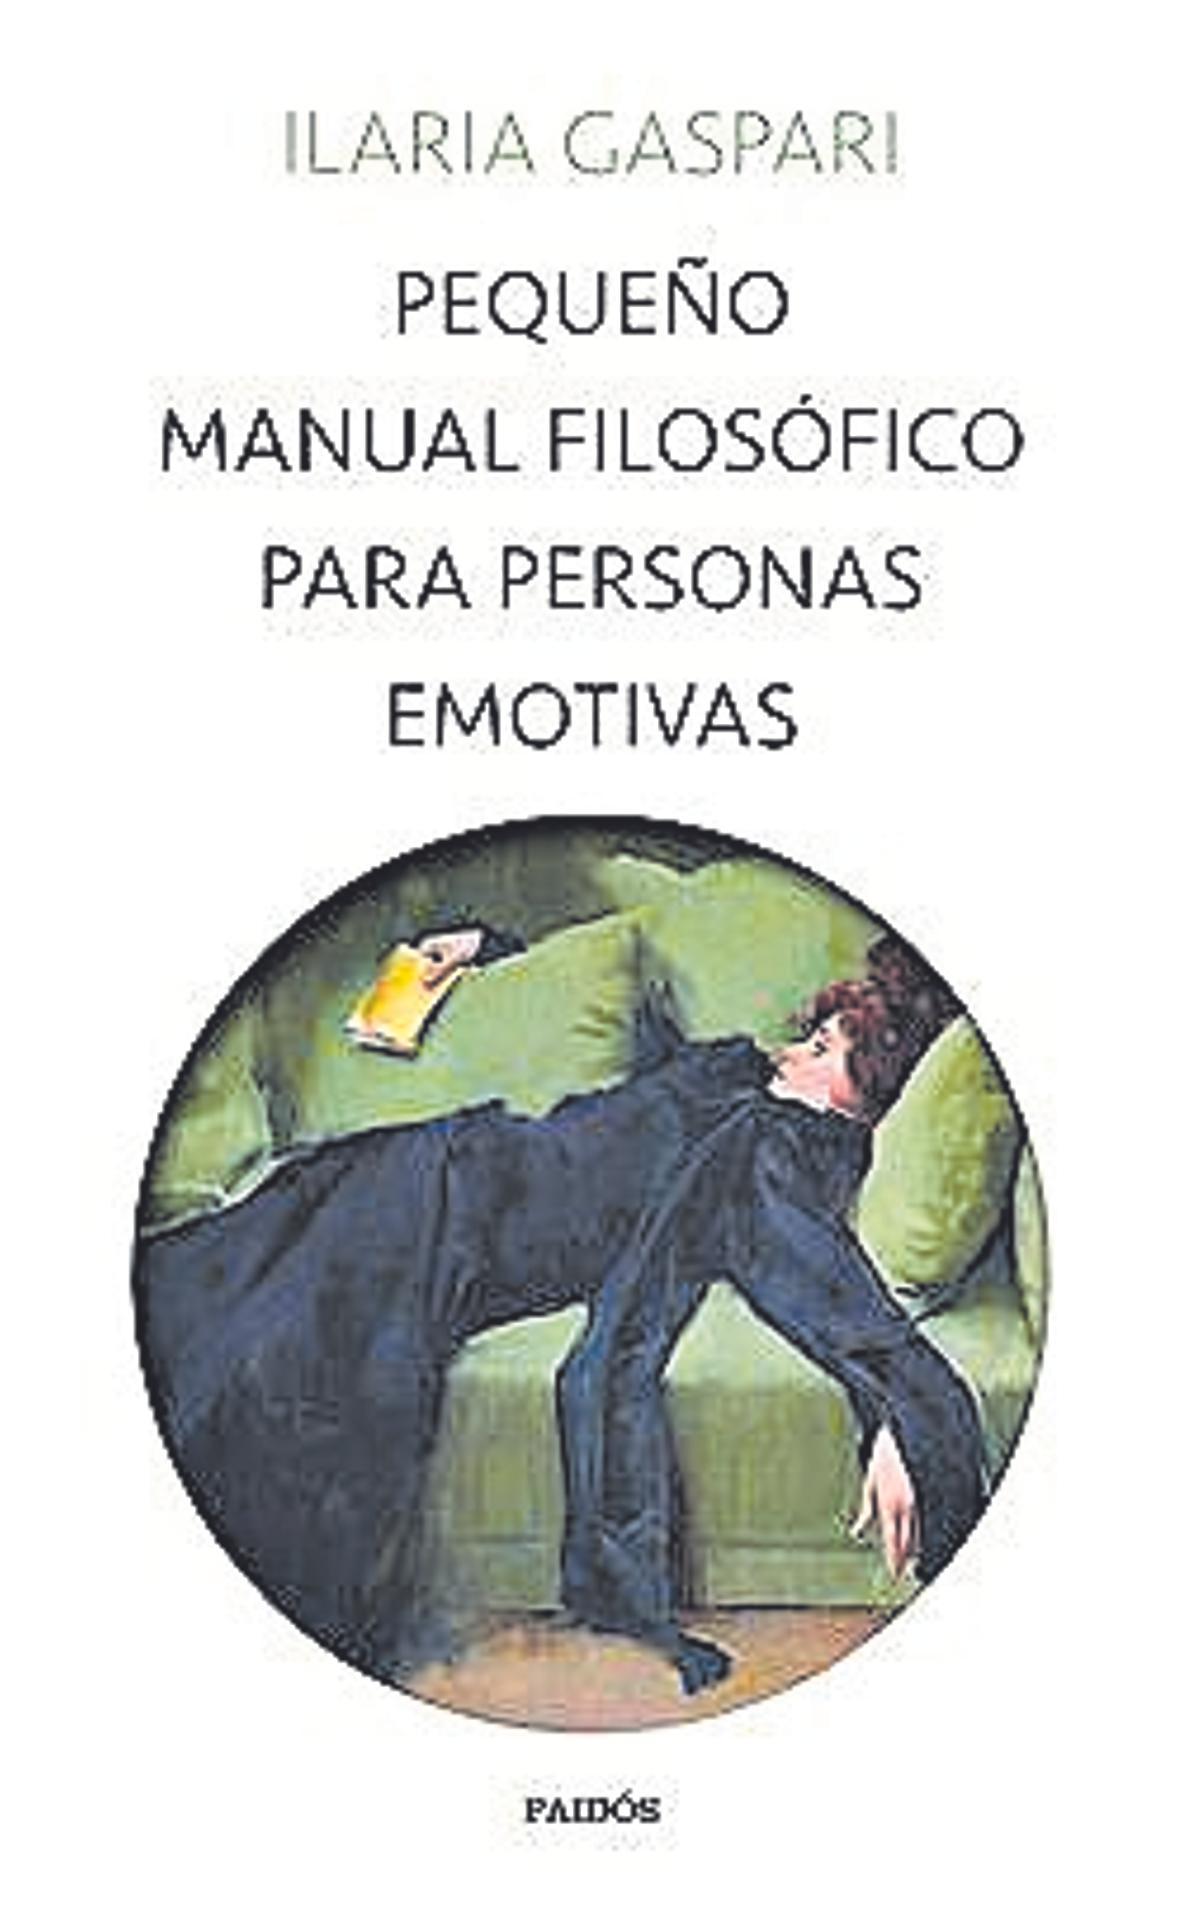 Pequeño manual filosófico para personas emotivas Ilaria Gaspari Paidós. 18,90 €